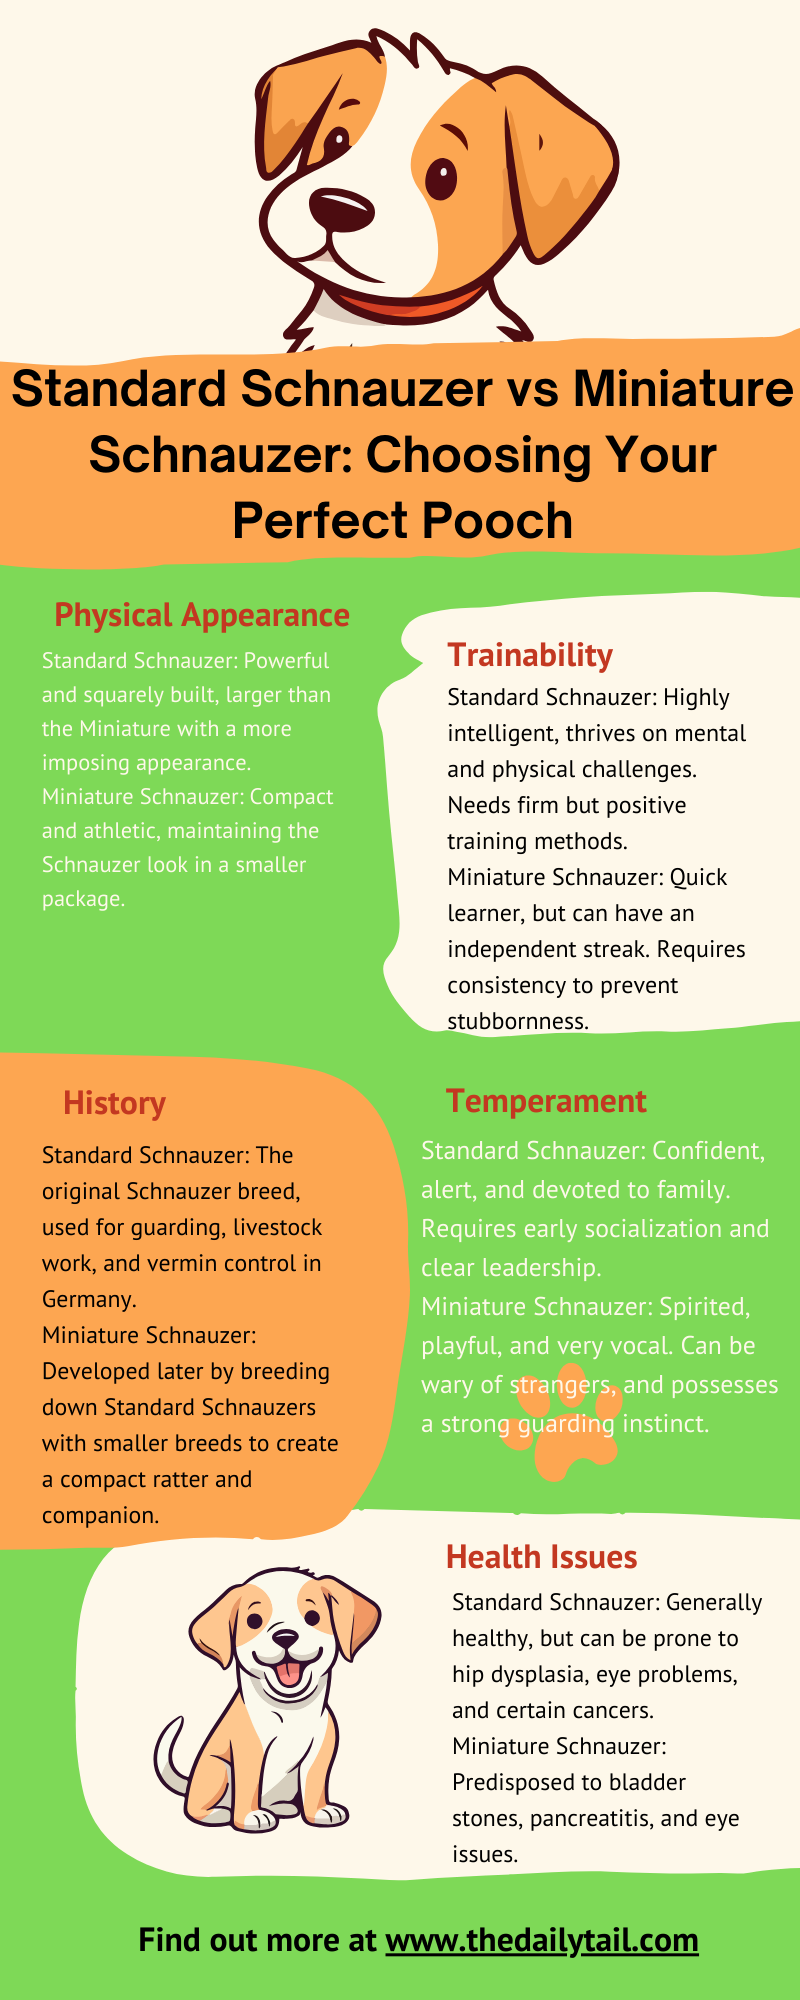 Standard Schnauzer vs Miniature Schnauzer infographic